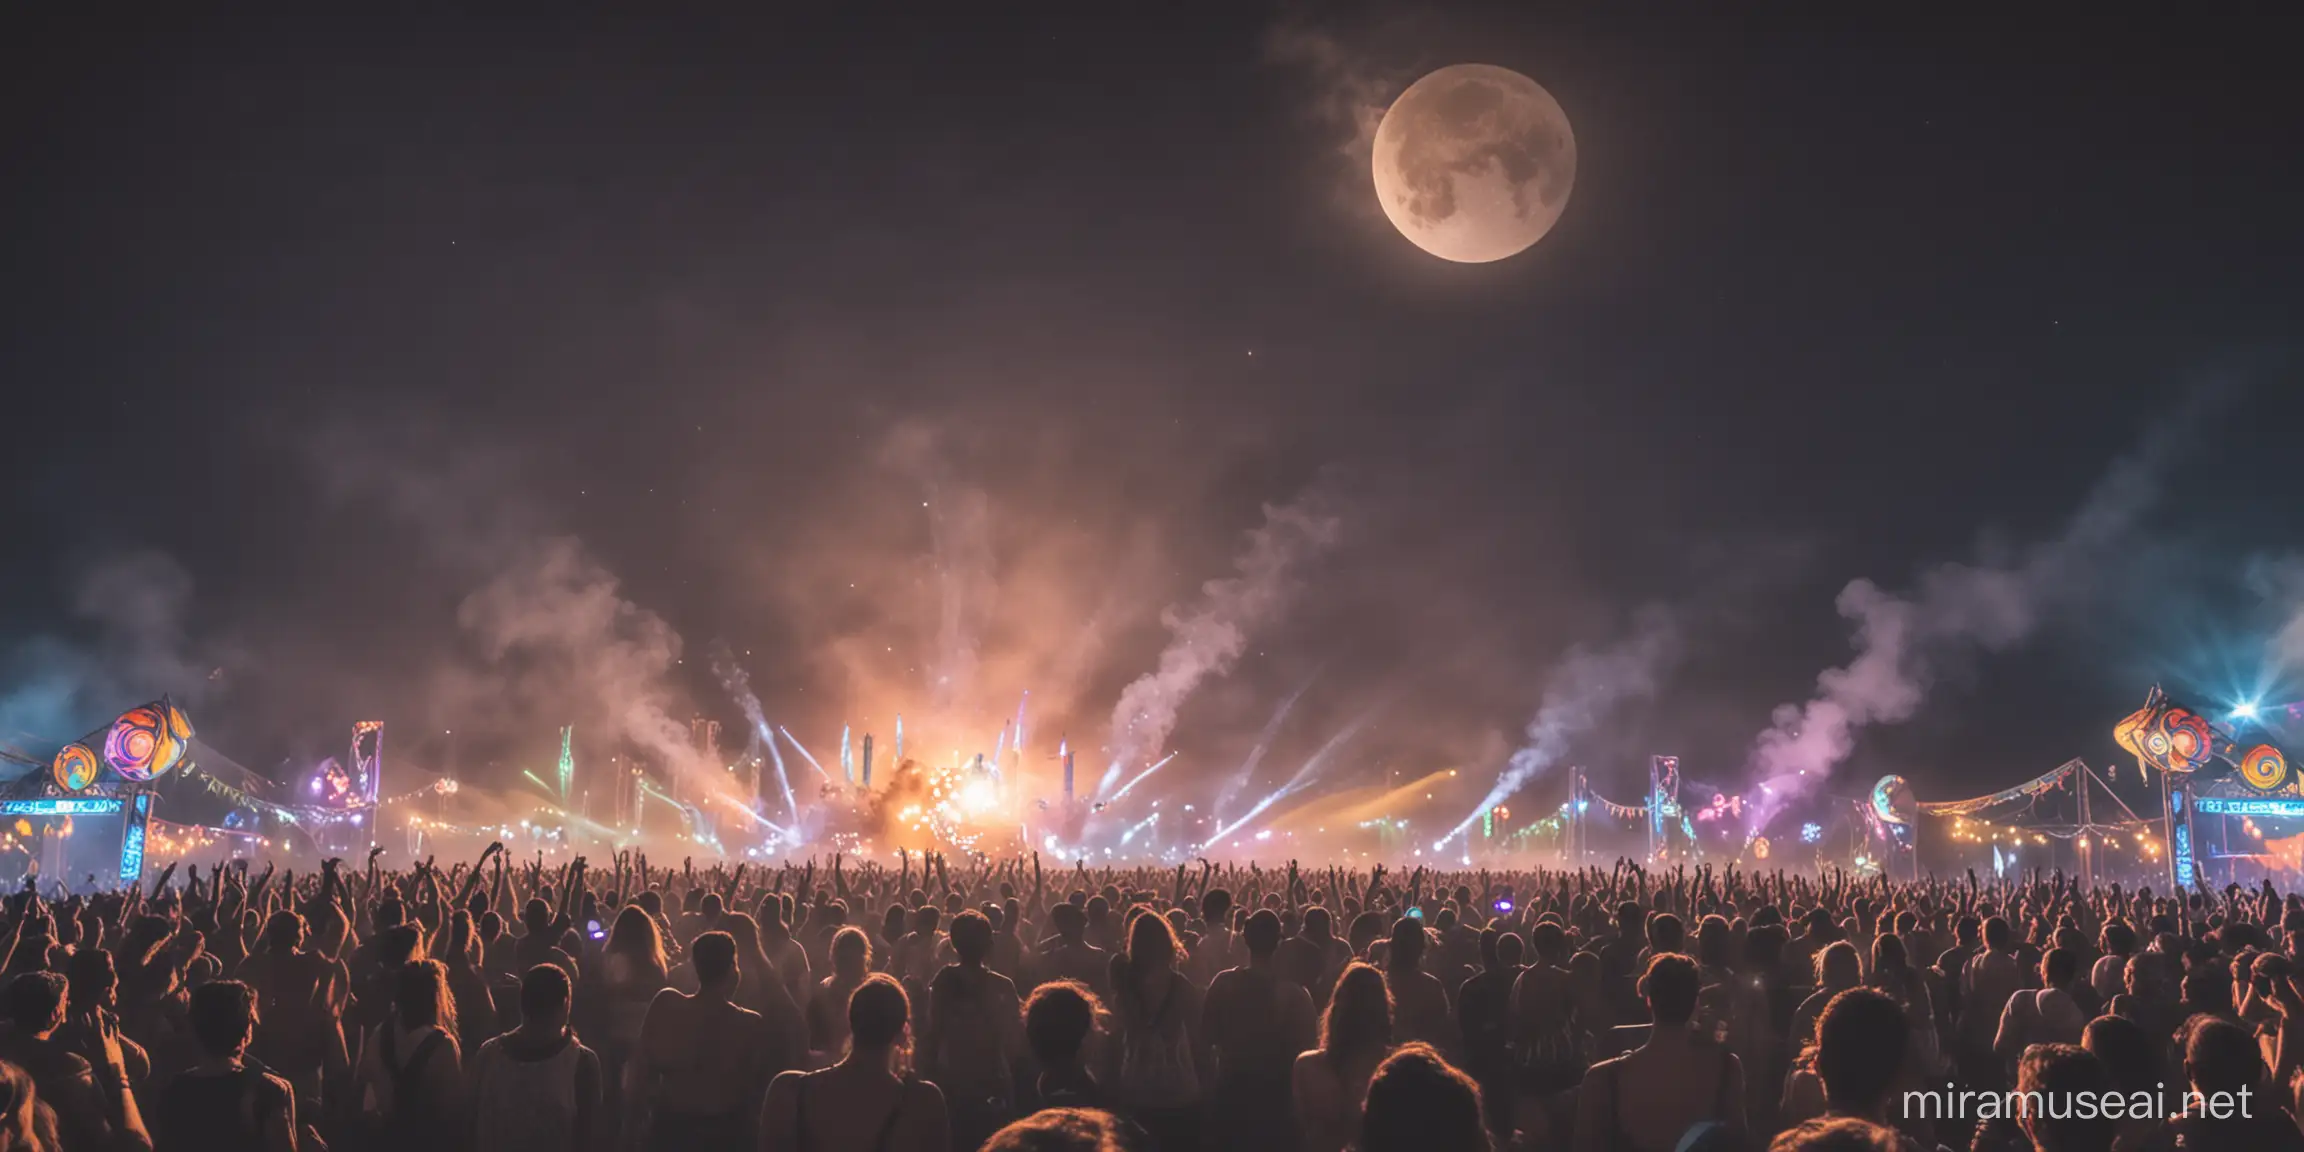 psytrance festival, at night, full moon, smoke, disco lights, people dancing